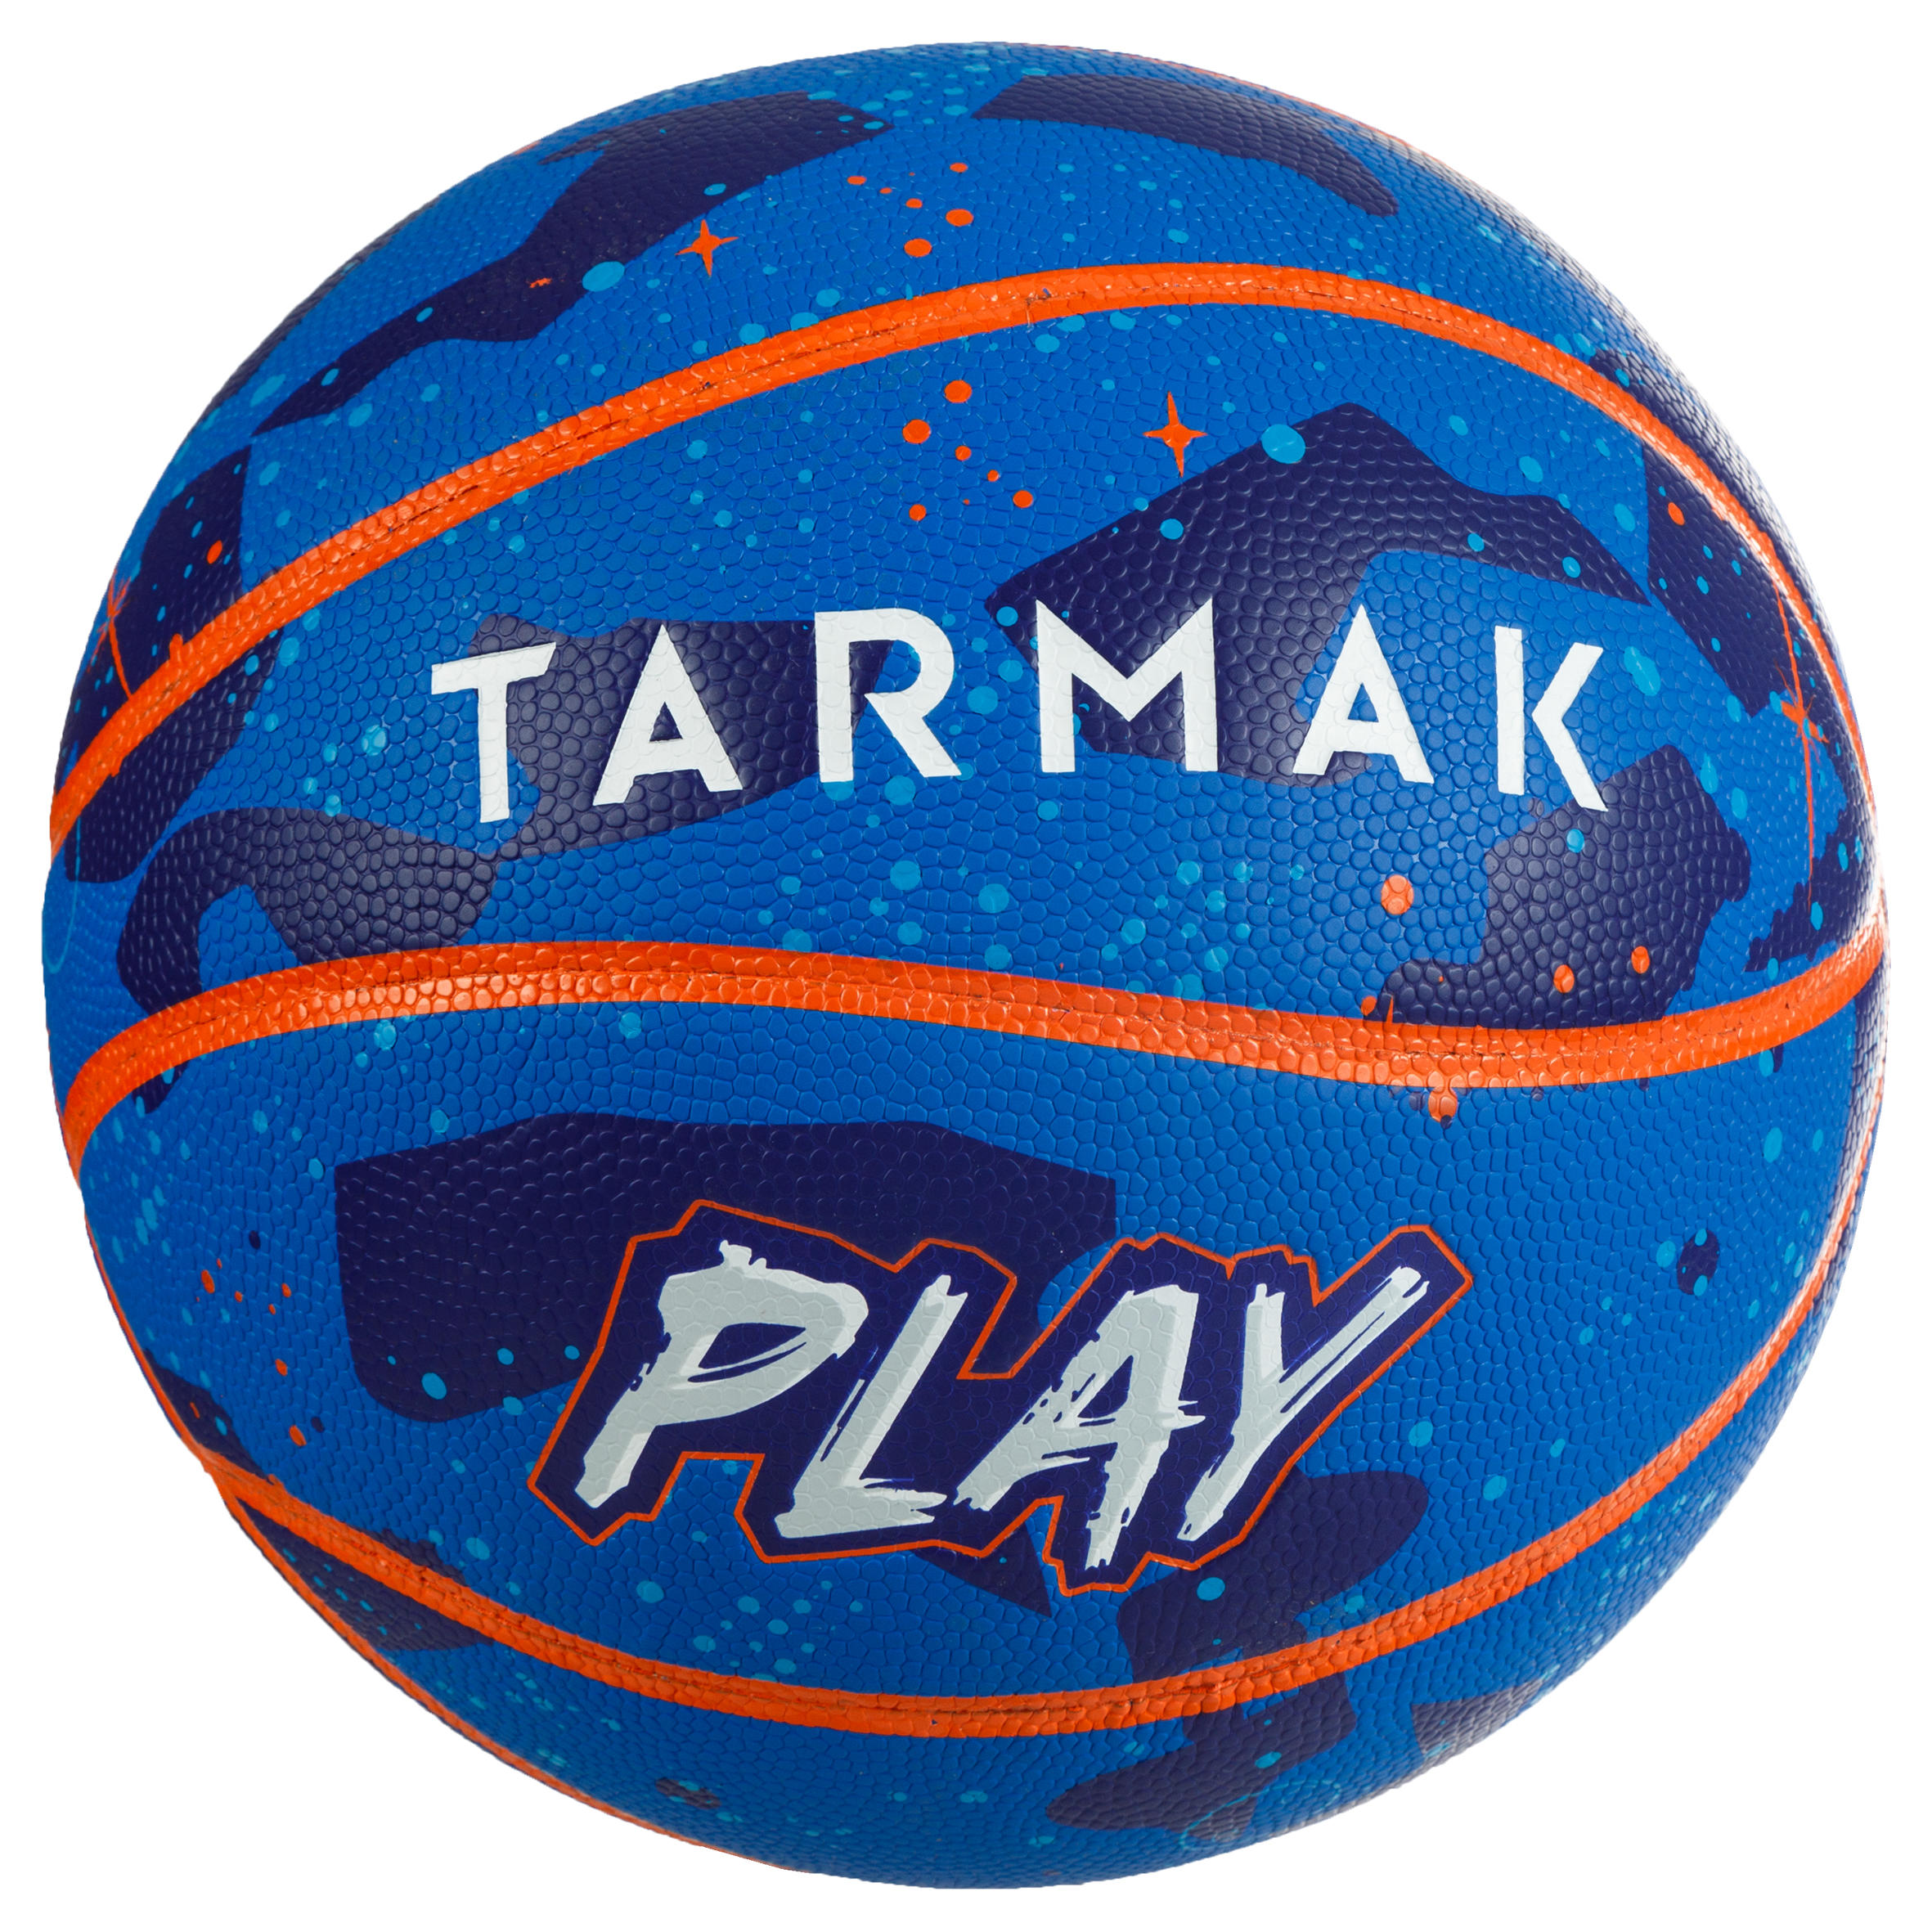 TARMAK K500 Play Kids' Beginner Basketball - Blue/Orange